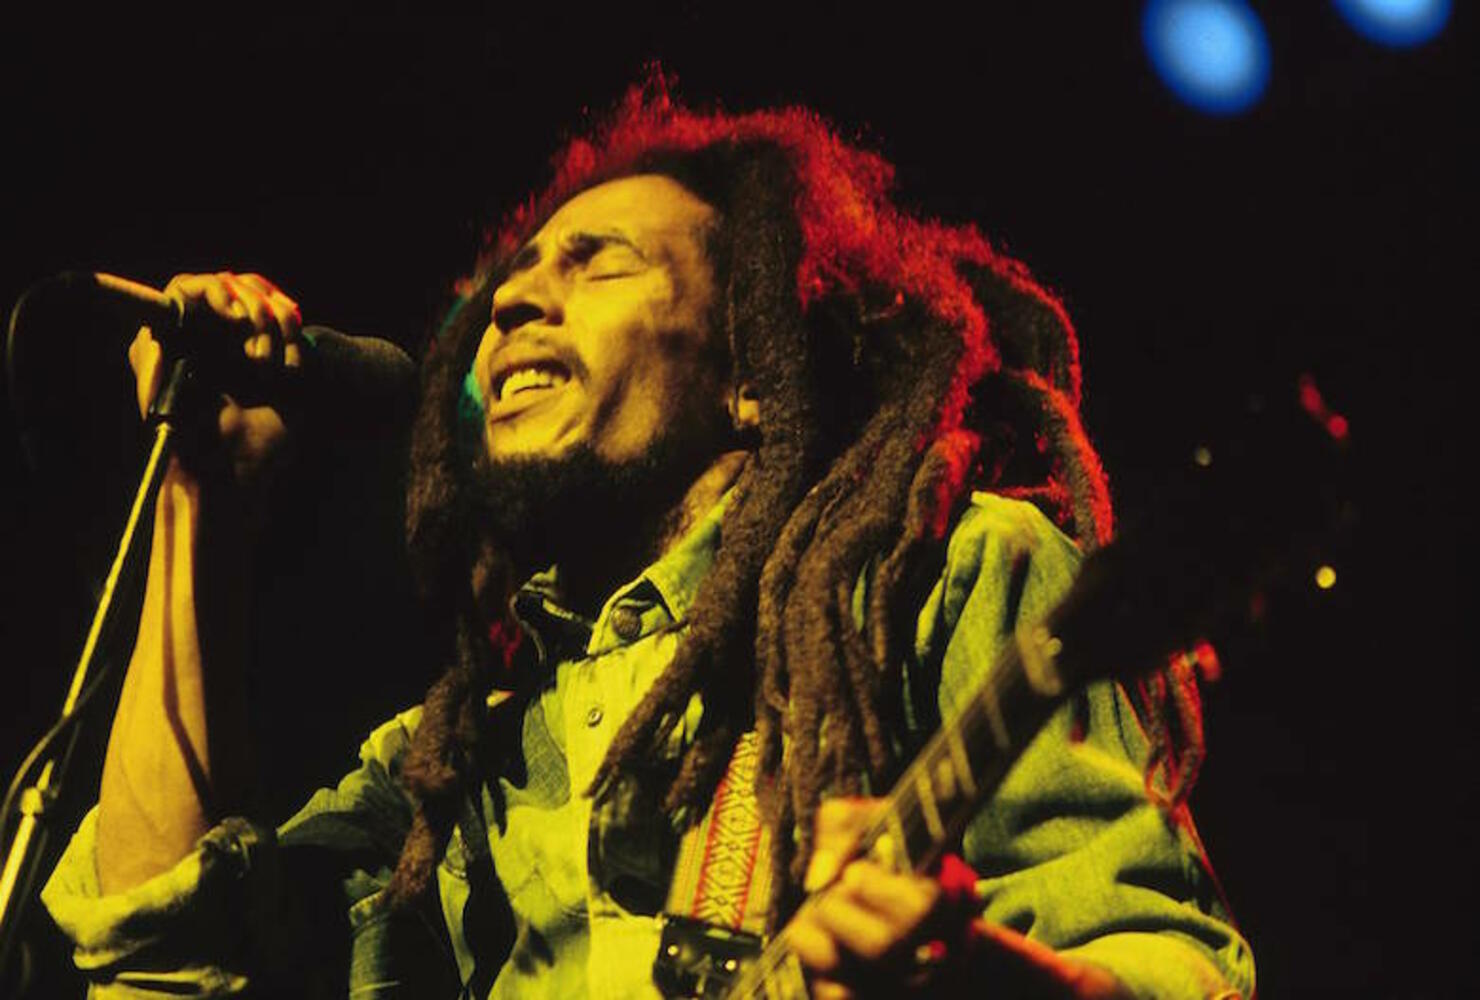 Bob Marley - Could You Be Loved (Lyrics) 